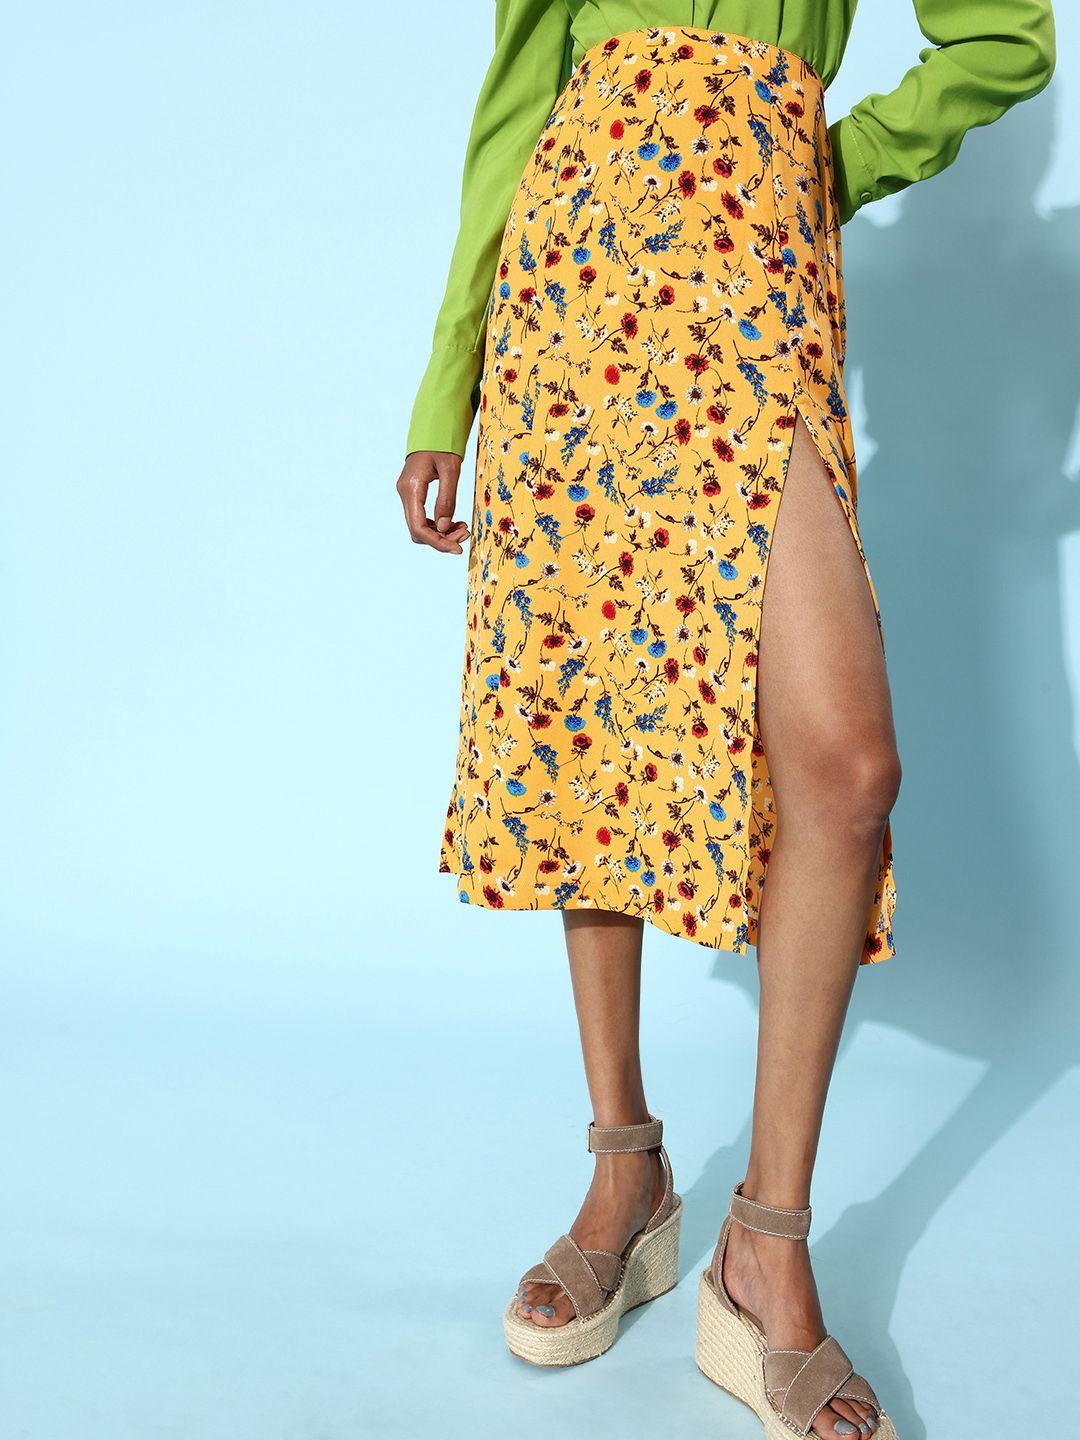 stylestone-women-mustard-yellow-&-orange-floral-print-midi-a-line-skirt-with-side-slit